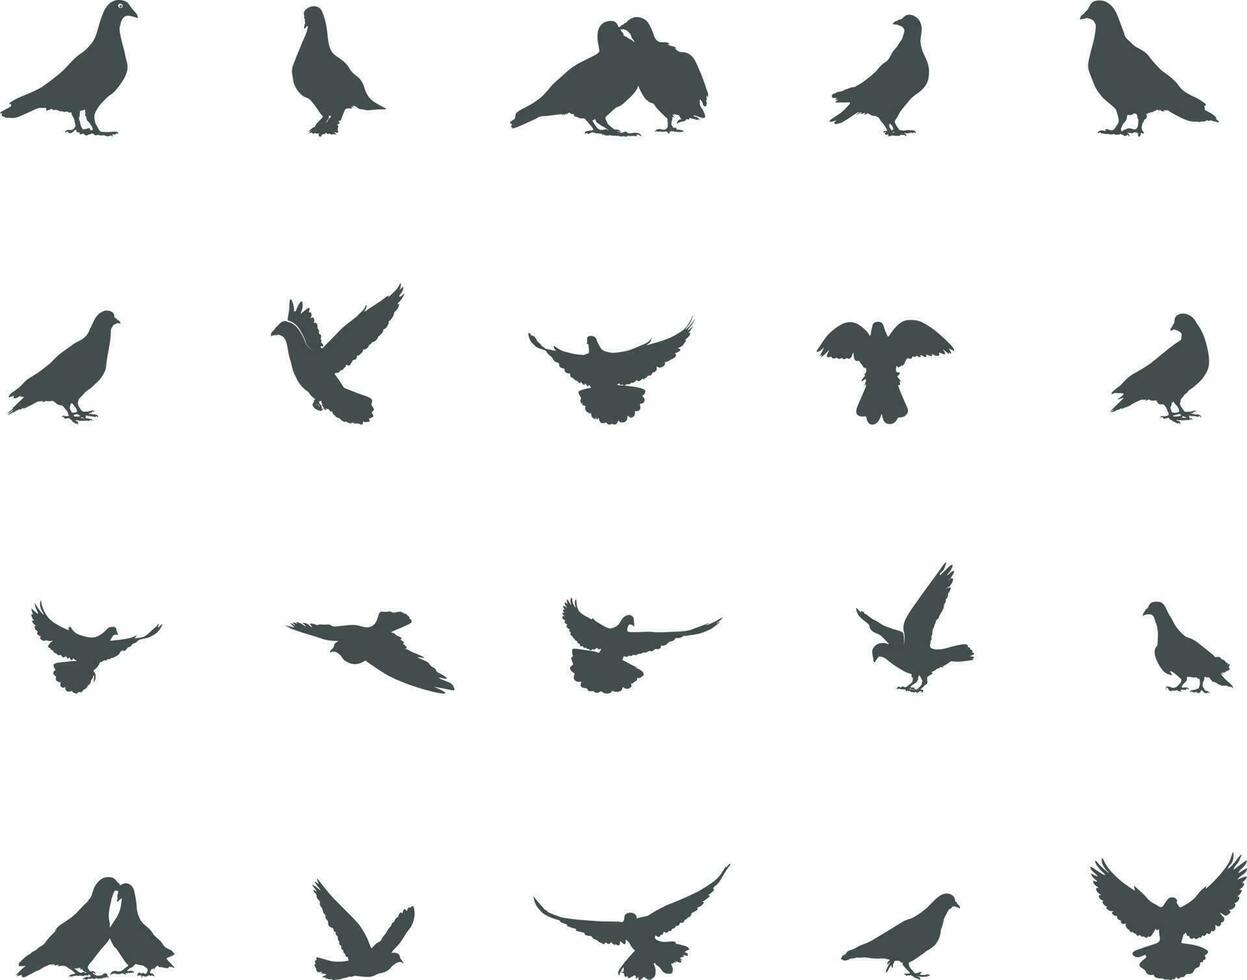 Pigeon silhouette, Pigeon vector illustration, Pigeon bird silhouette.